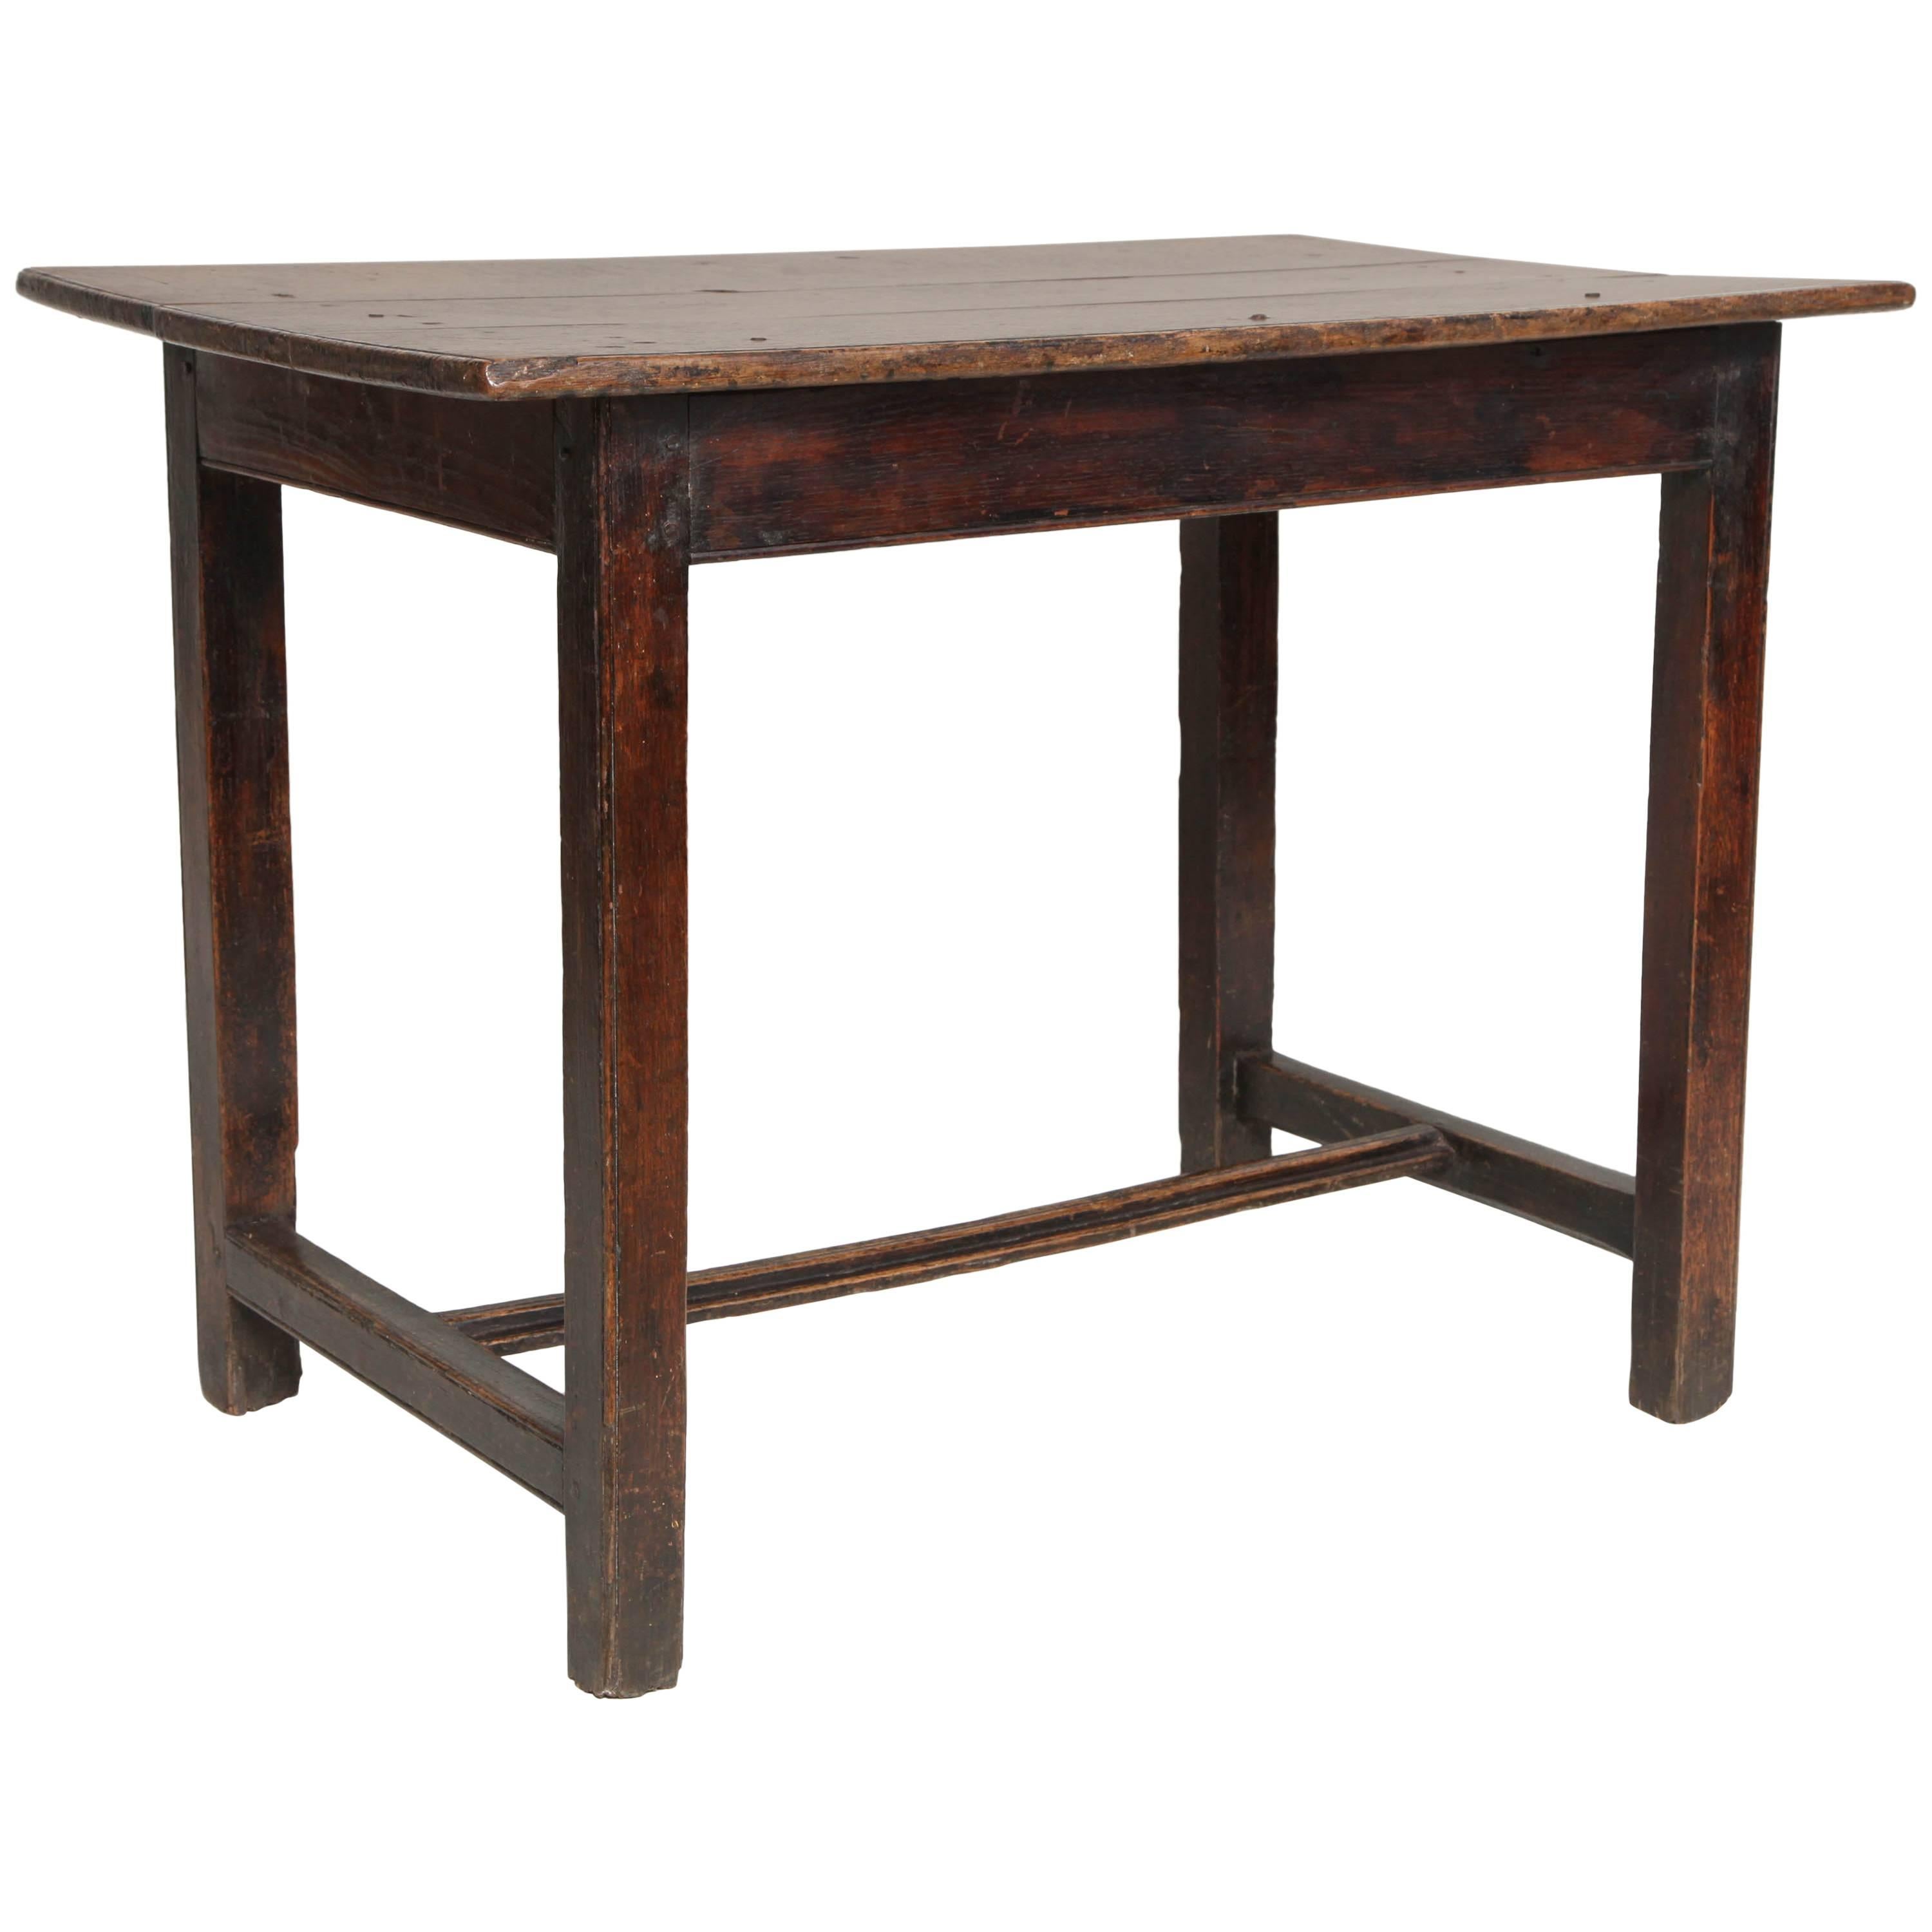 Late 18th Century Oak Center Table